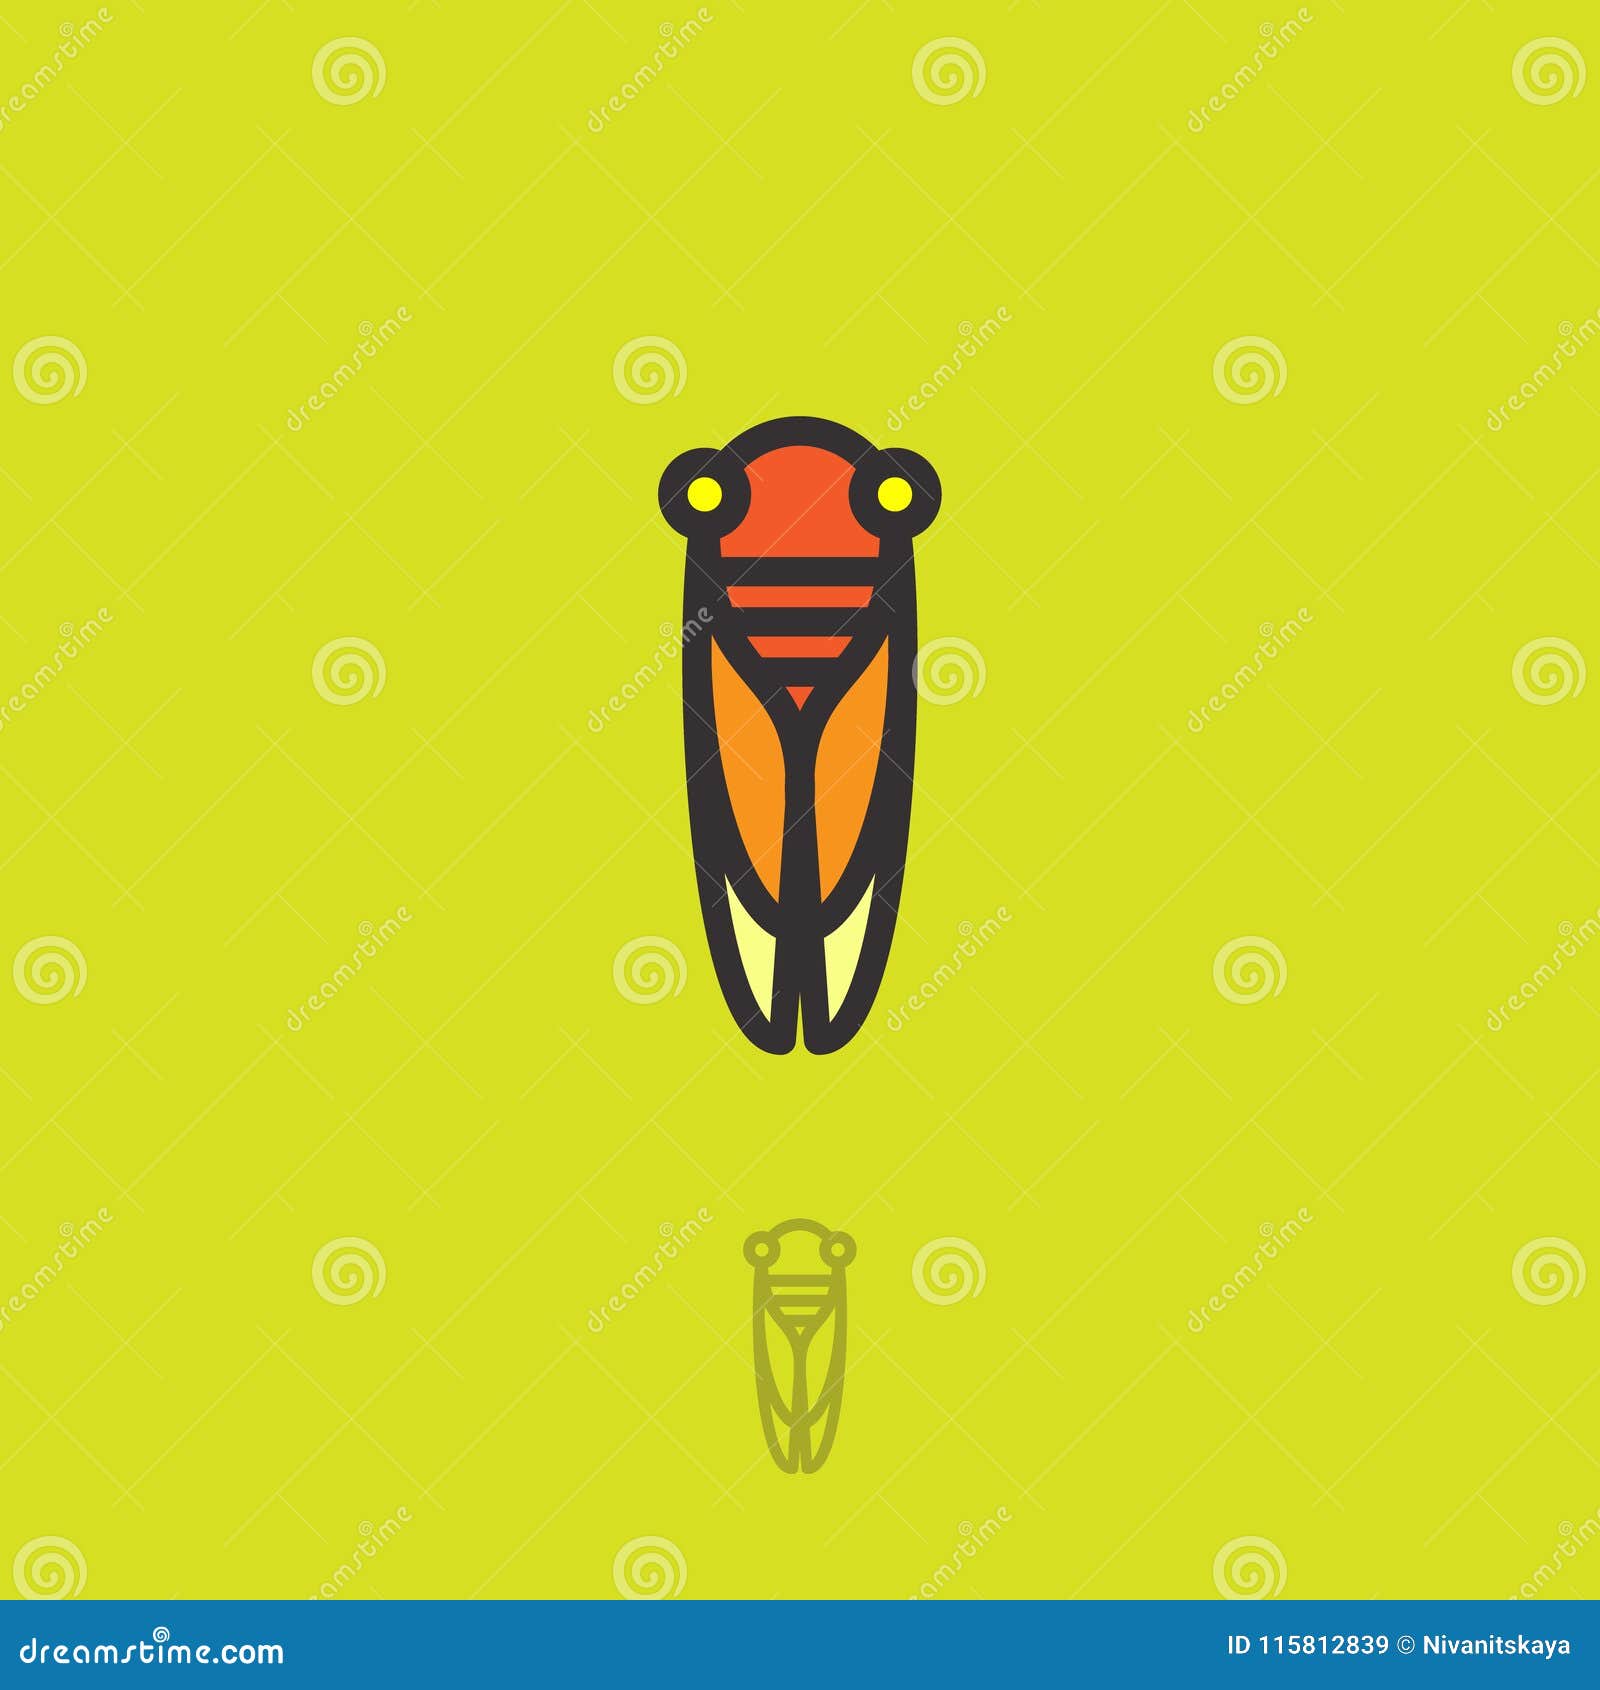 cicada flat logo. cicada icon. linear logo. yellow-orange small cicada on a green-yellow background.